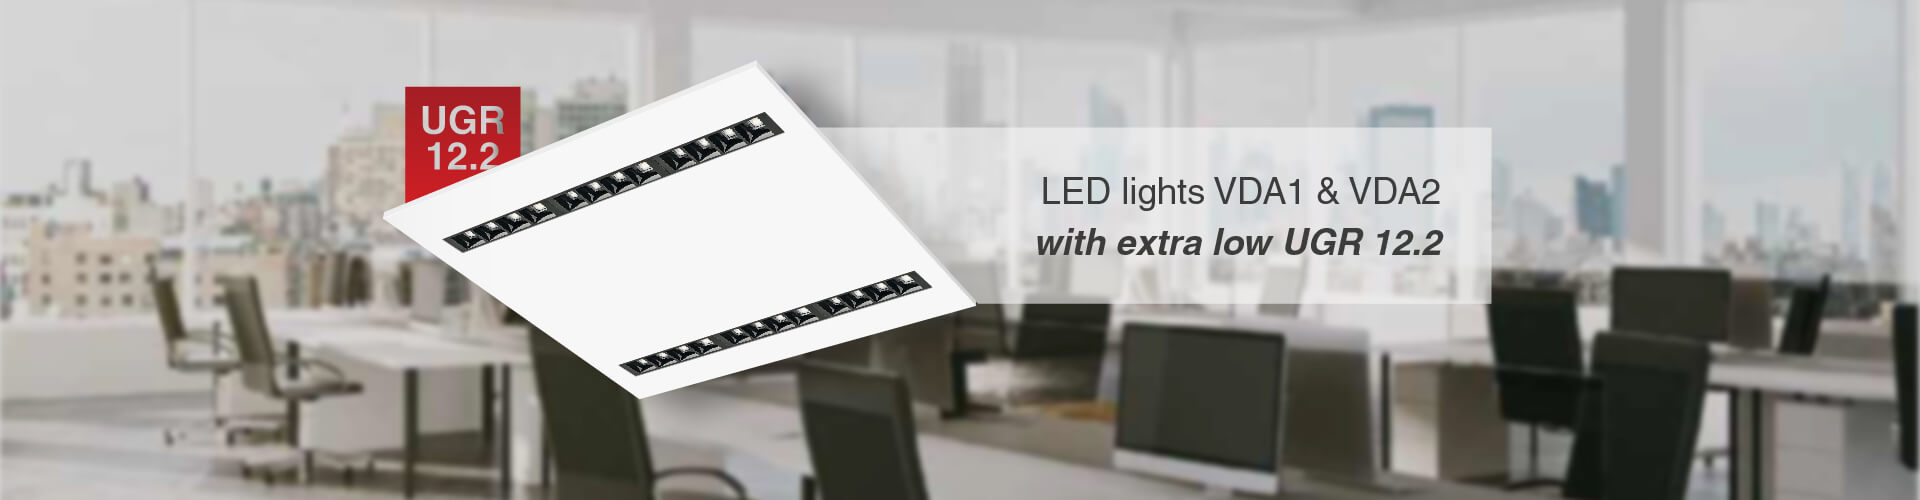 LED lights VDA1 & VDA2 with extra low UGR 12.2